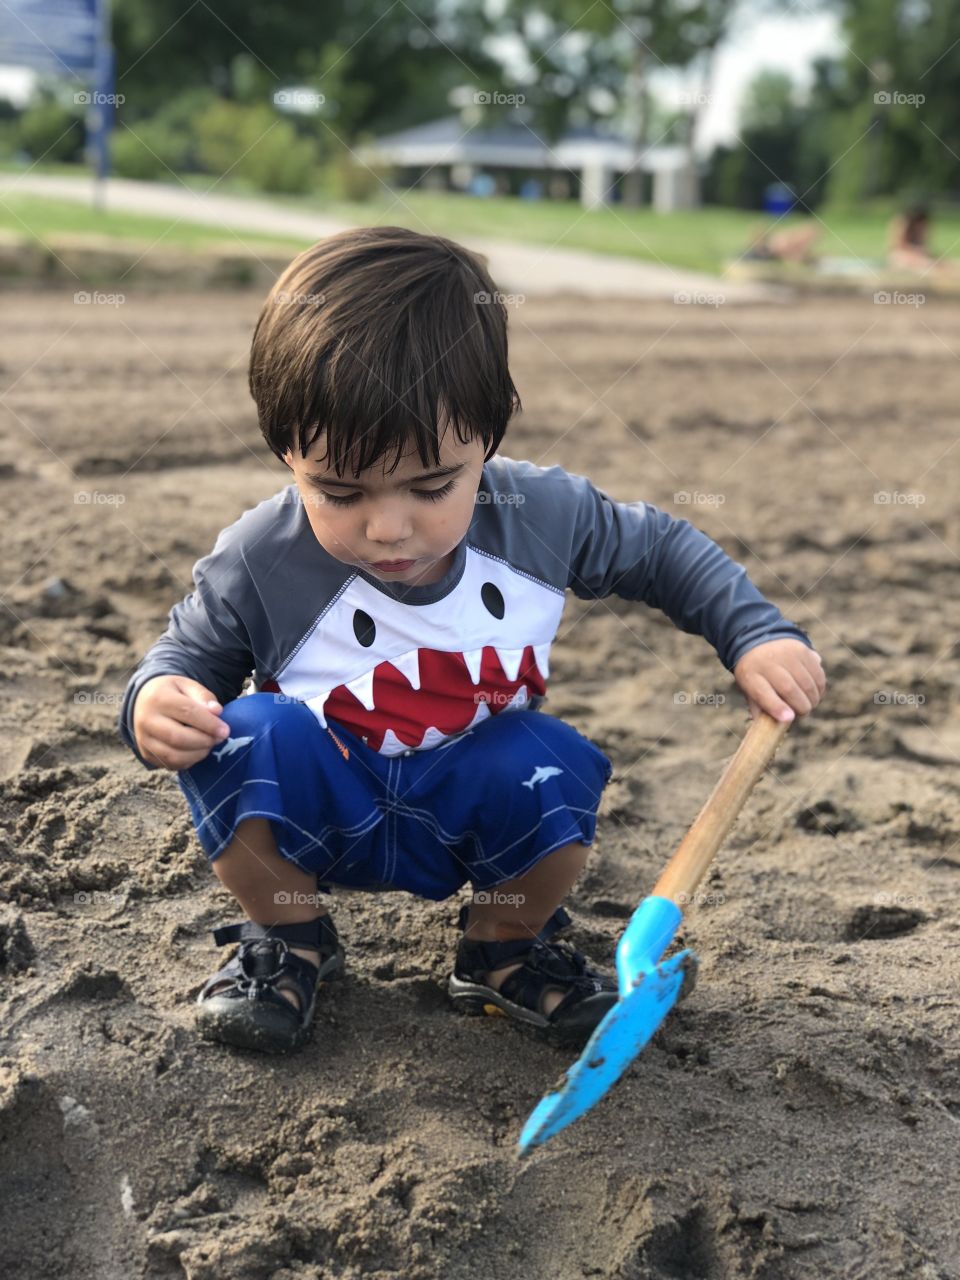 Digging at the beach